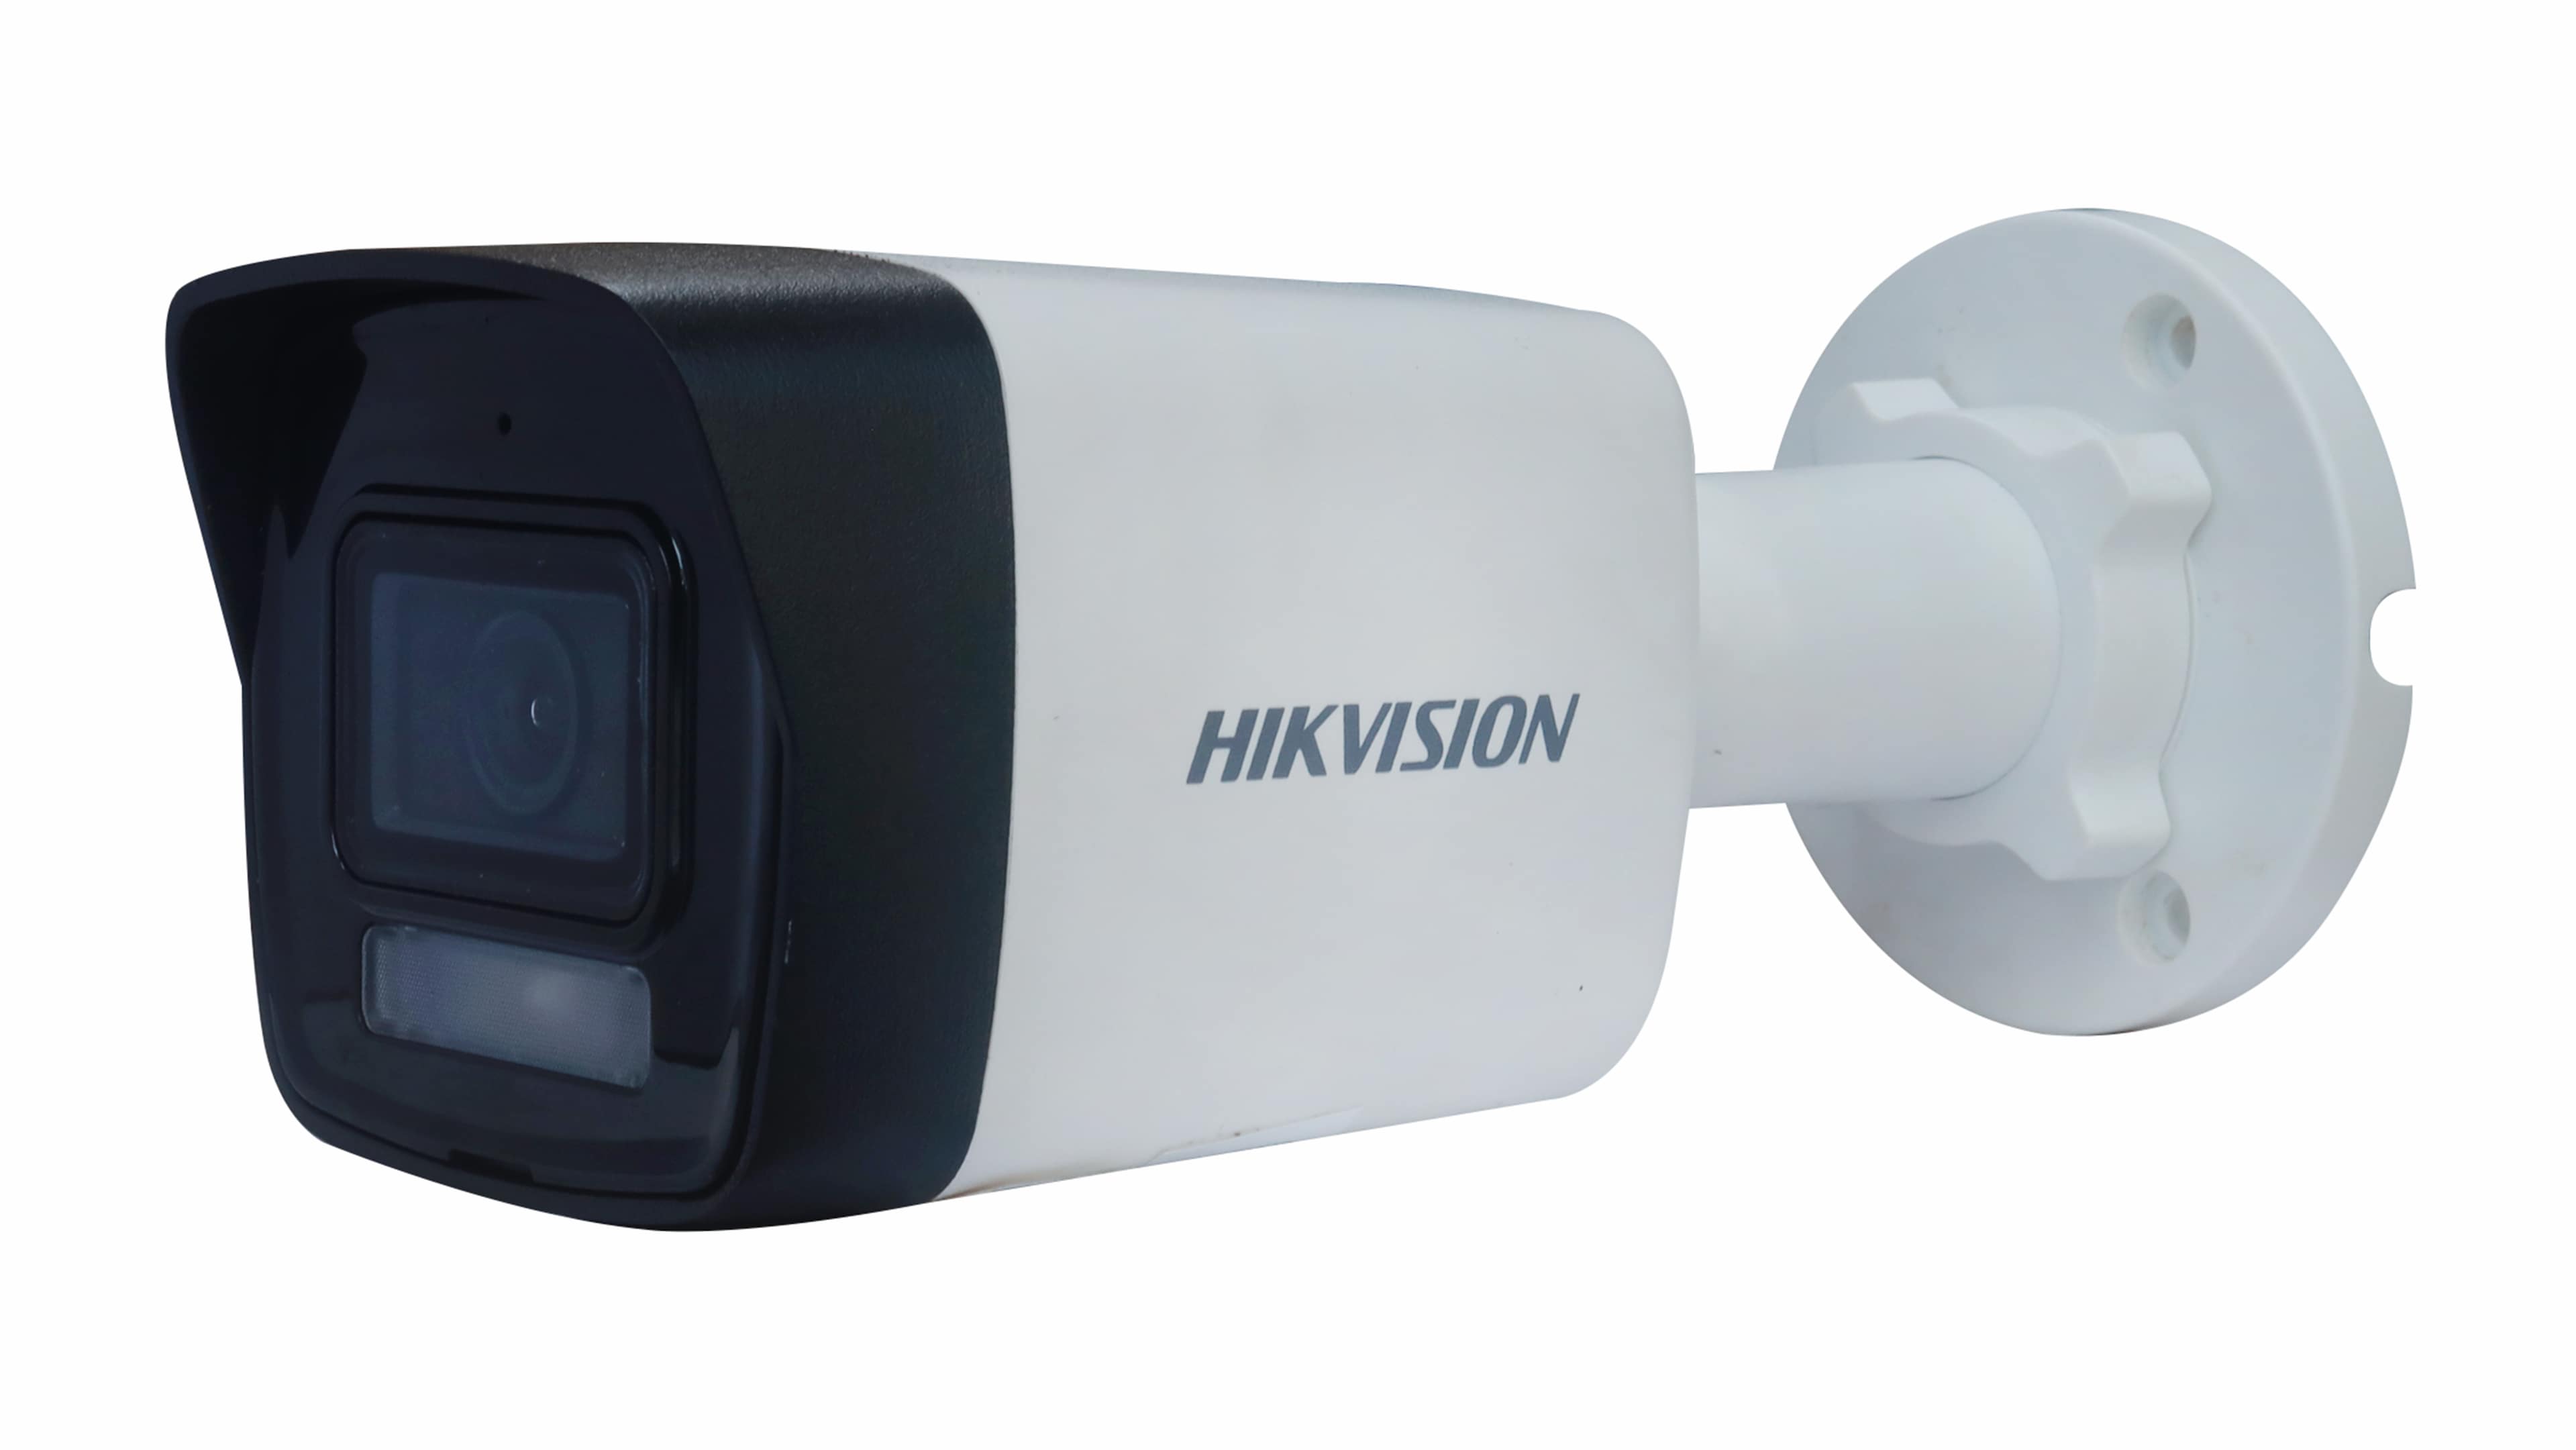 Hikvision 4MP Smart Hybrid Light Bullet IP Camera DS-2CD1043G2-LIU, Day/Night Vision, Built-in Mic, Audio & Video Recording, IP67, H.265+, 4mm Lens